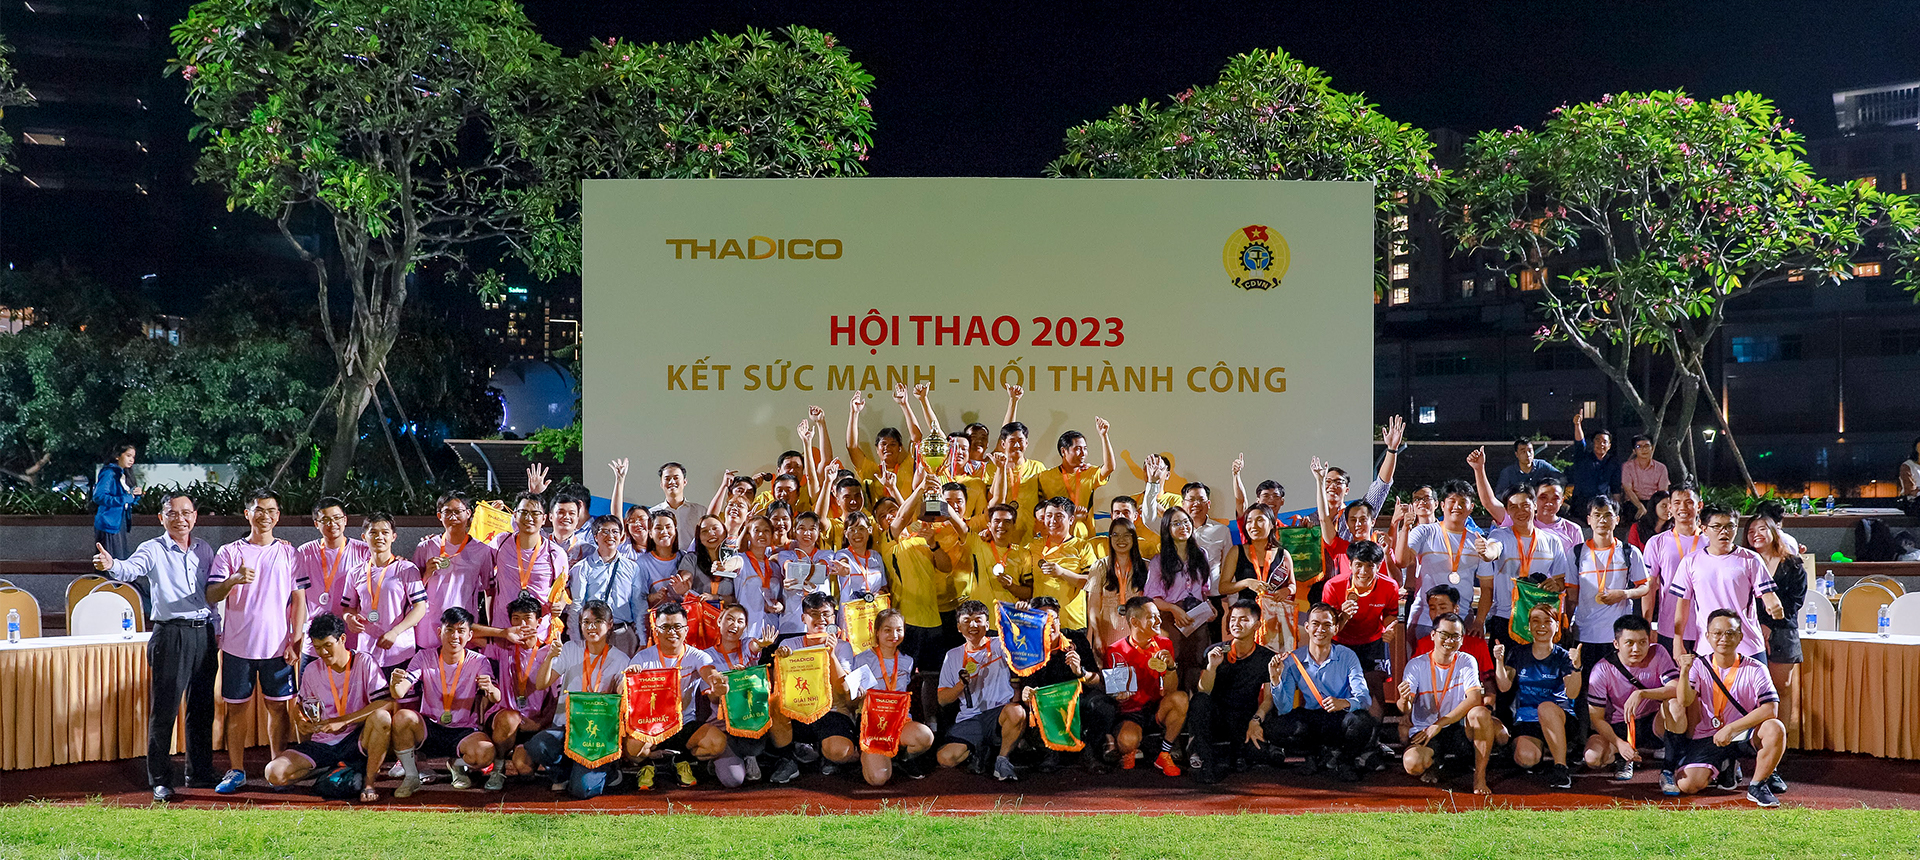 Highlights of THADICO Sports Festival 2023